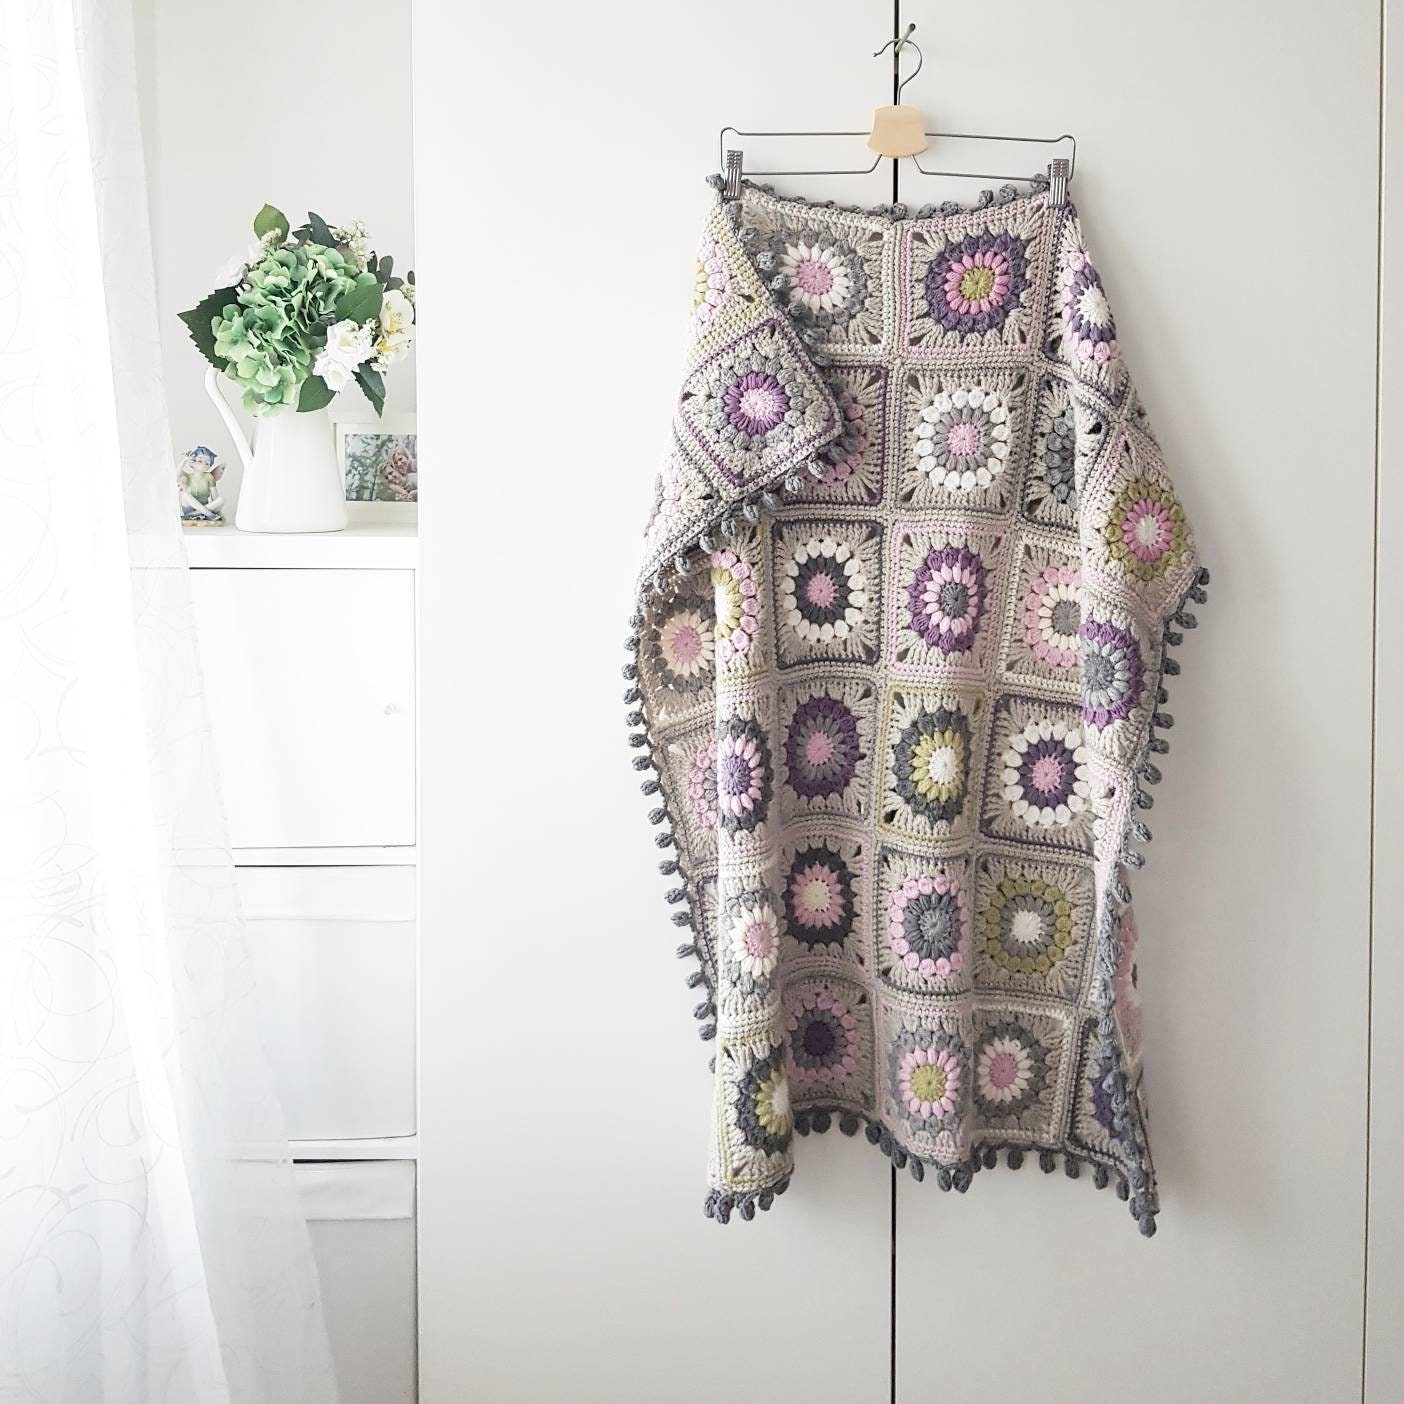 Handmade Wool Blanket Ready to Ship 37x37 inches Sunburst | Etsy